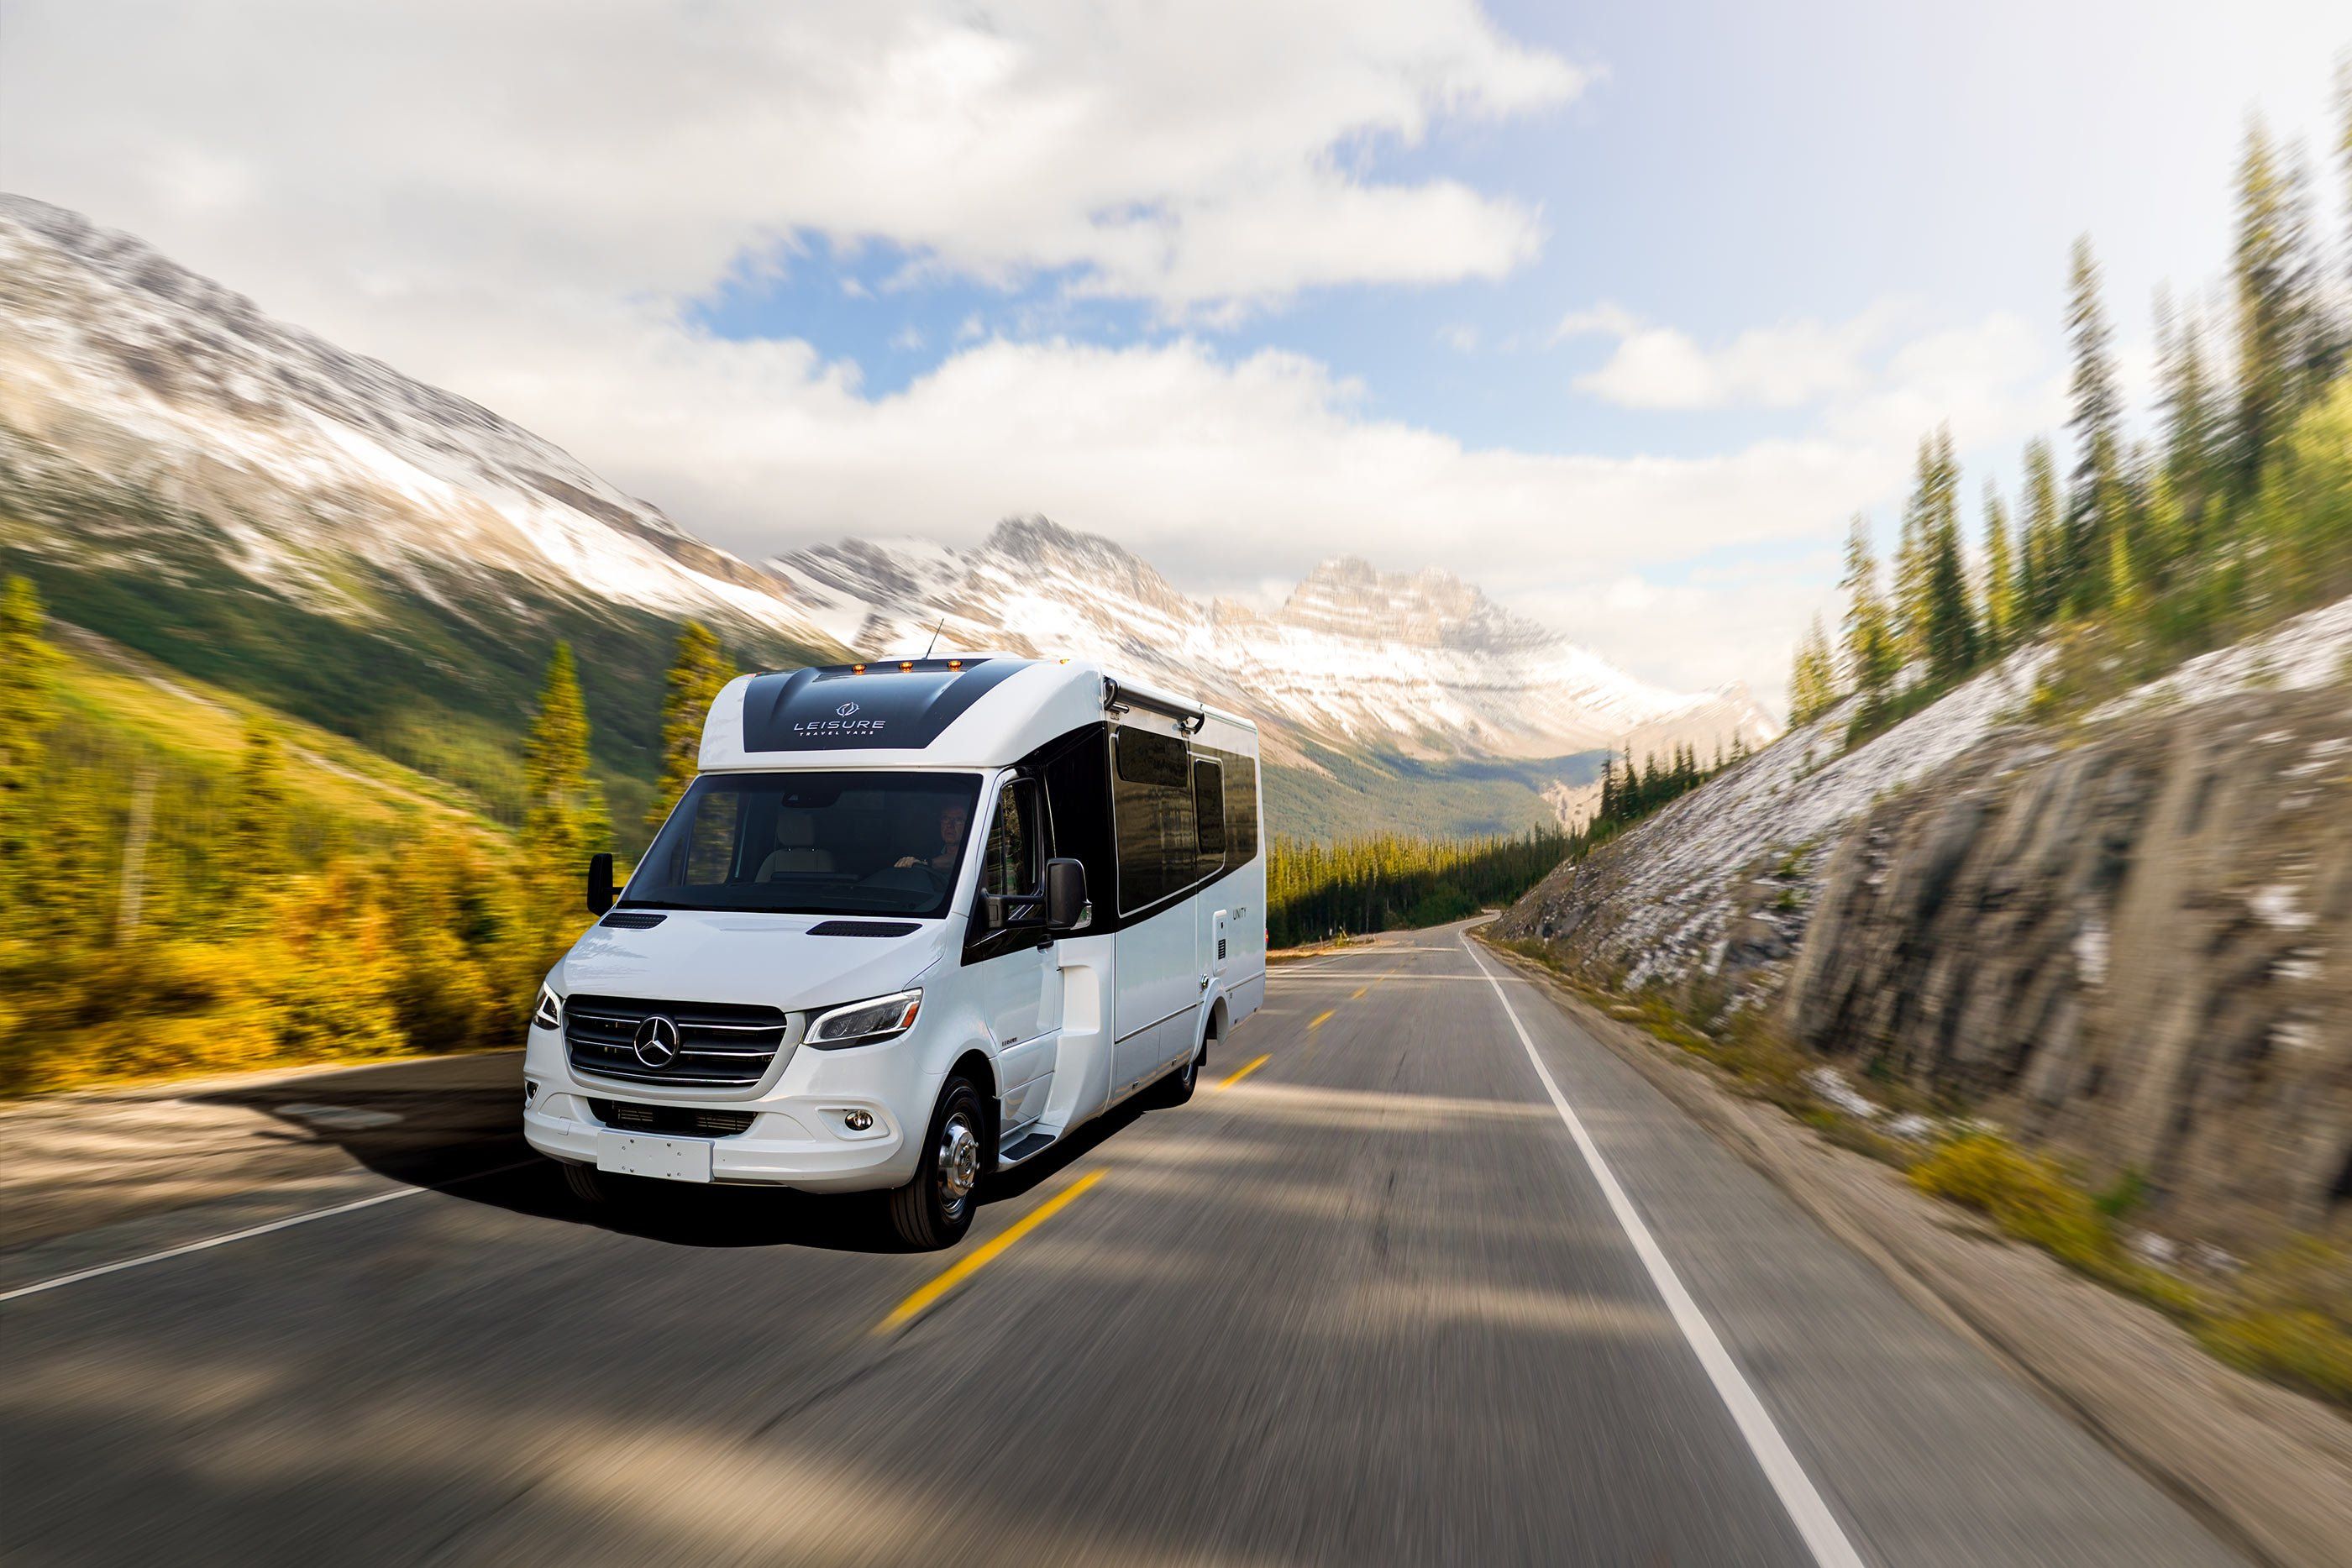 Ingenieurs herhaling Bedenk The Leisure Travel Vans Unity Is a Rolling Apartment of a Camper Van